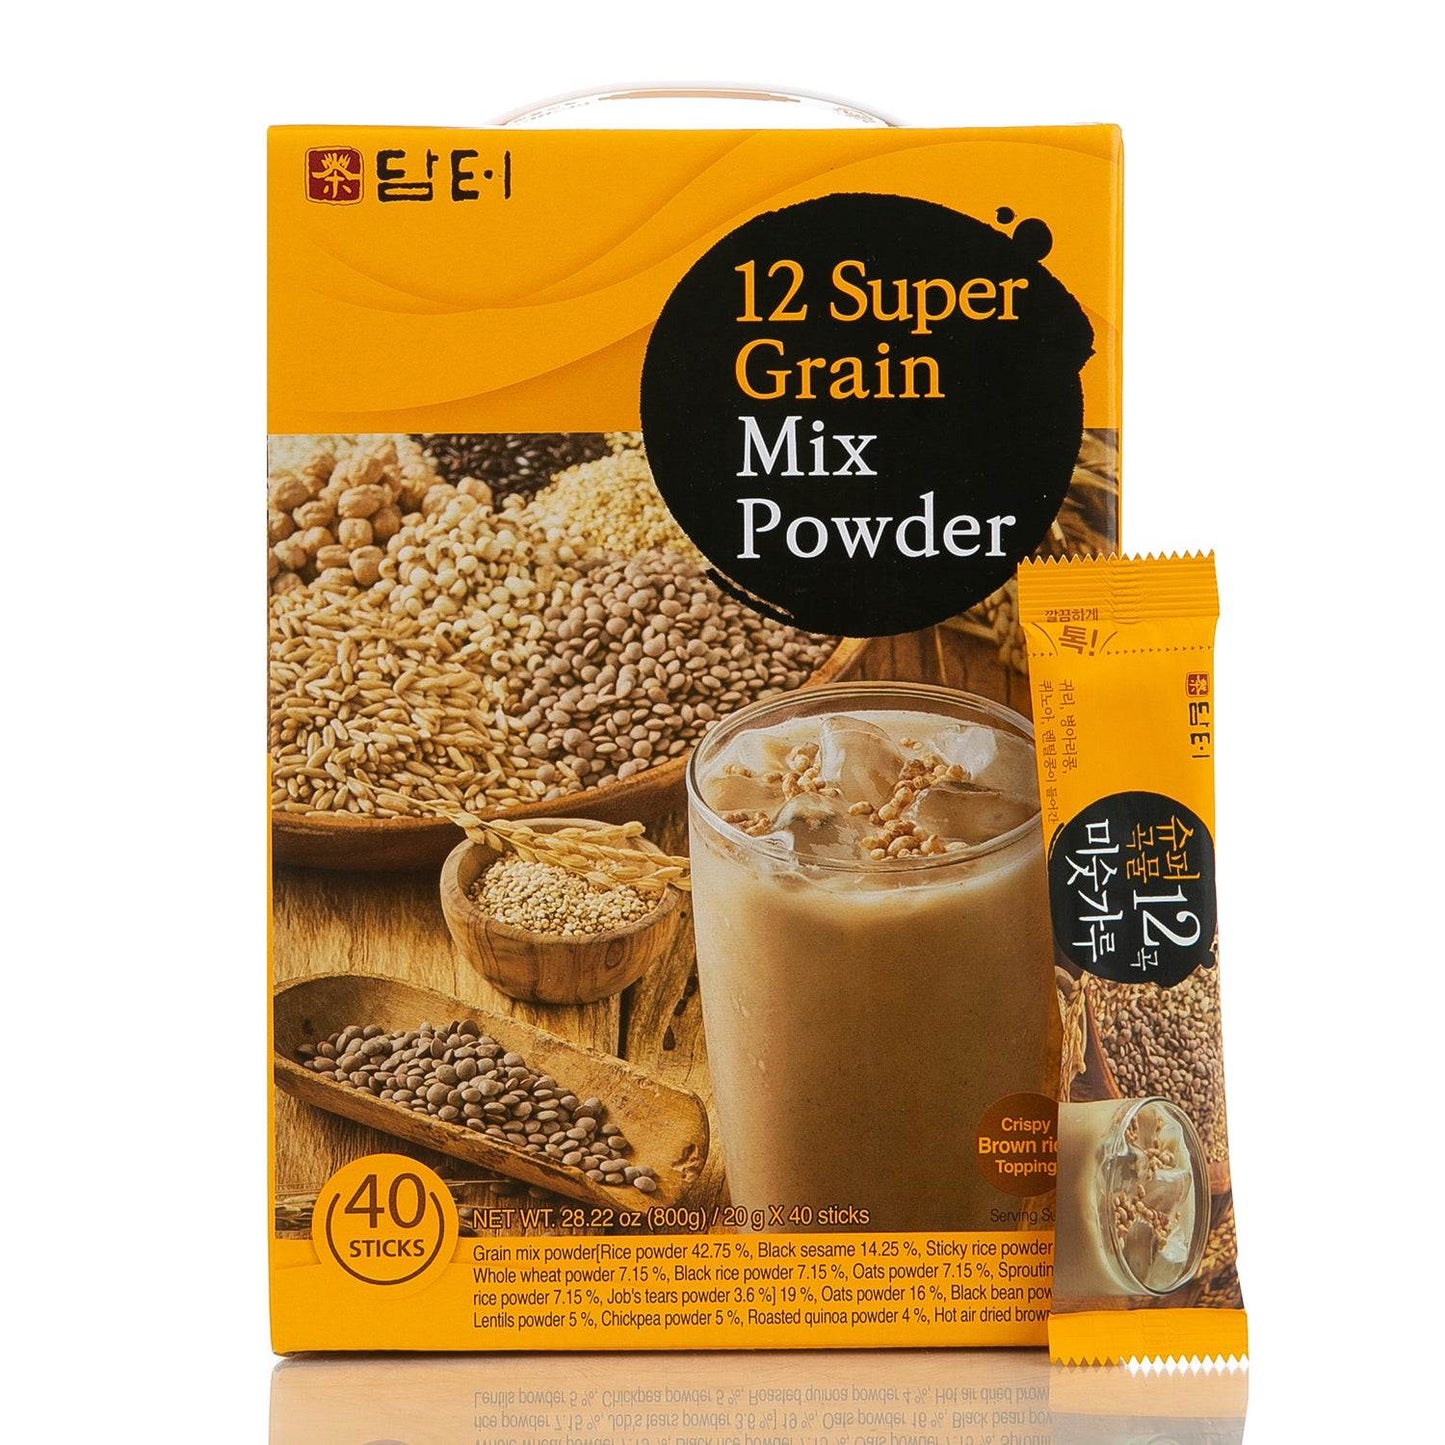 Super Grains Mixed Powder Sticks